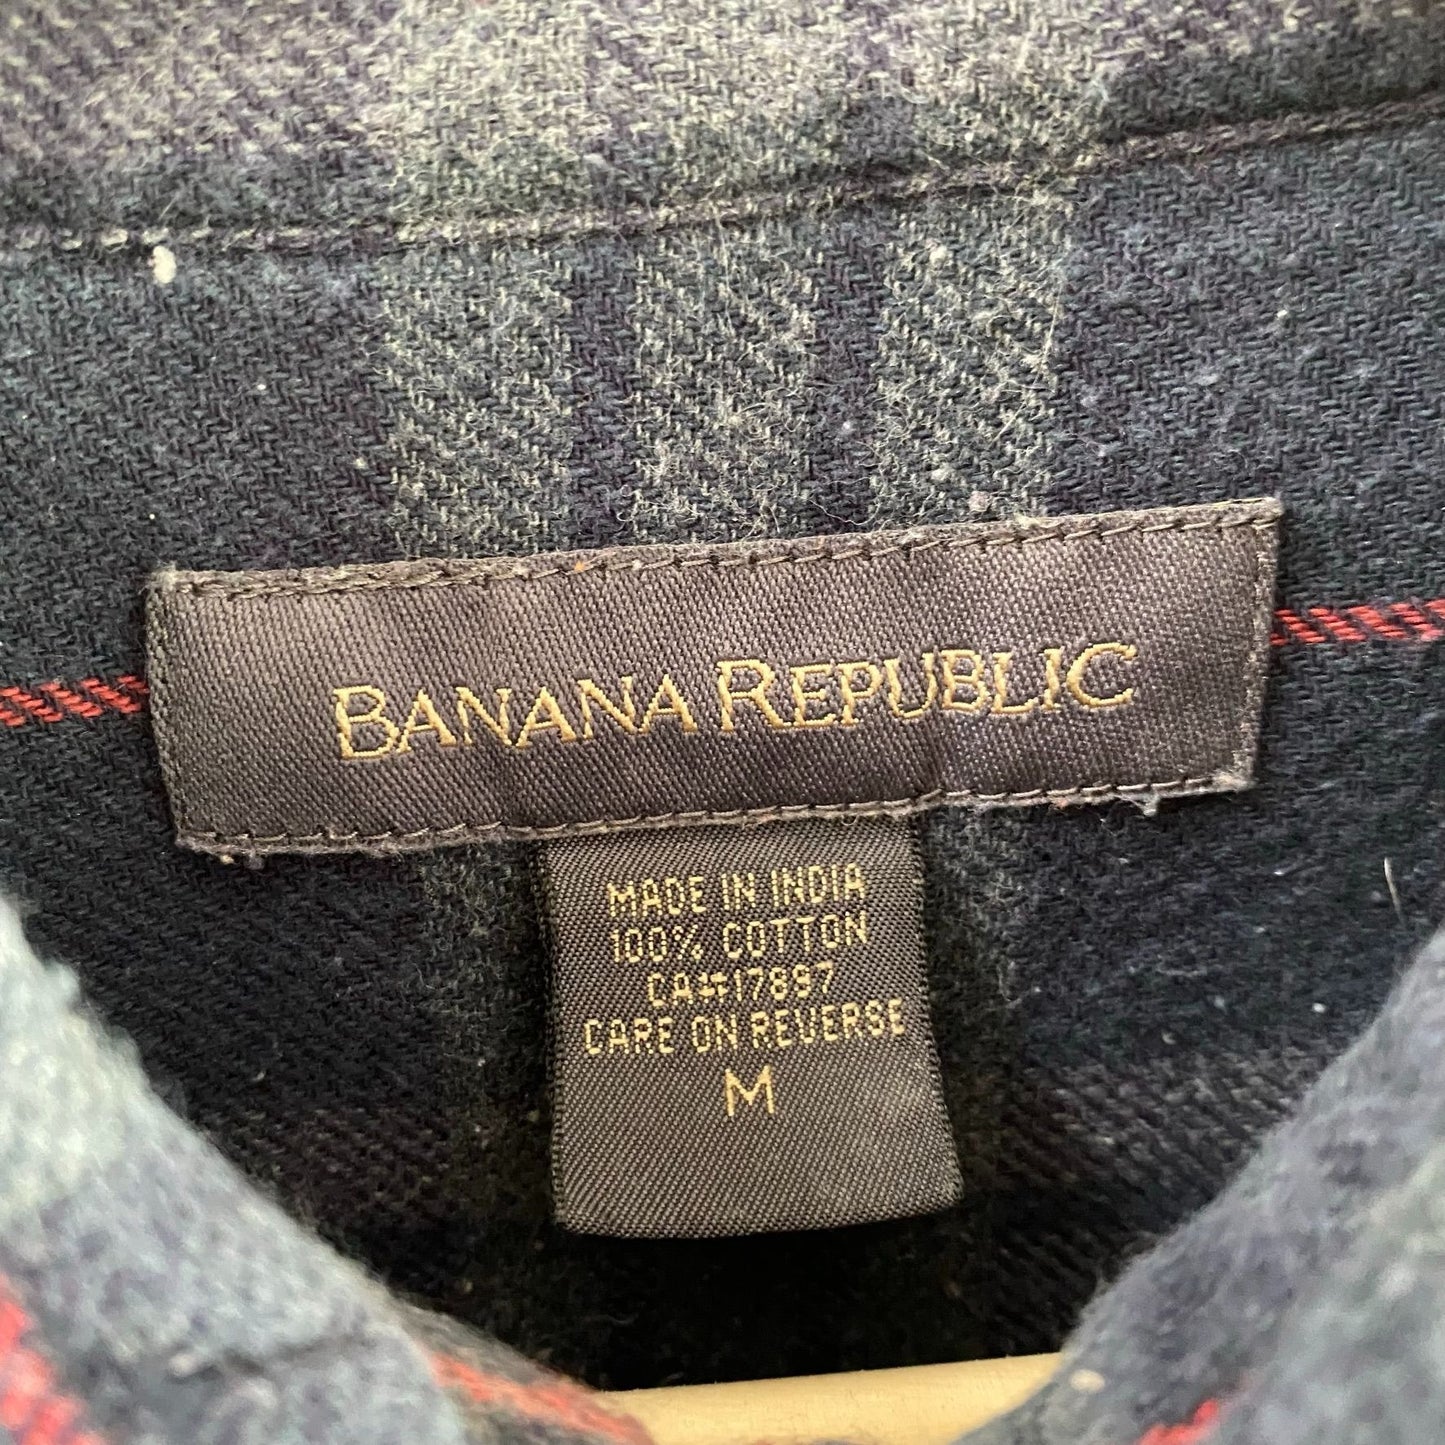 Banana Republic Plaid Flannel Shirt